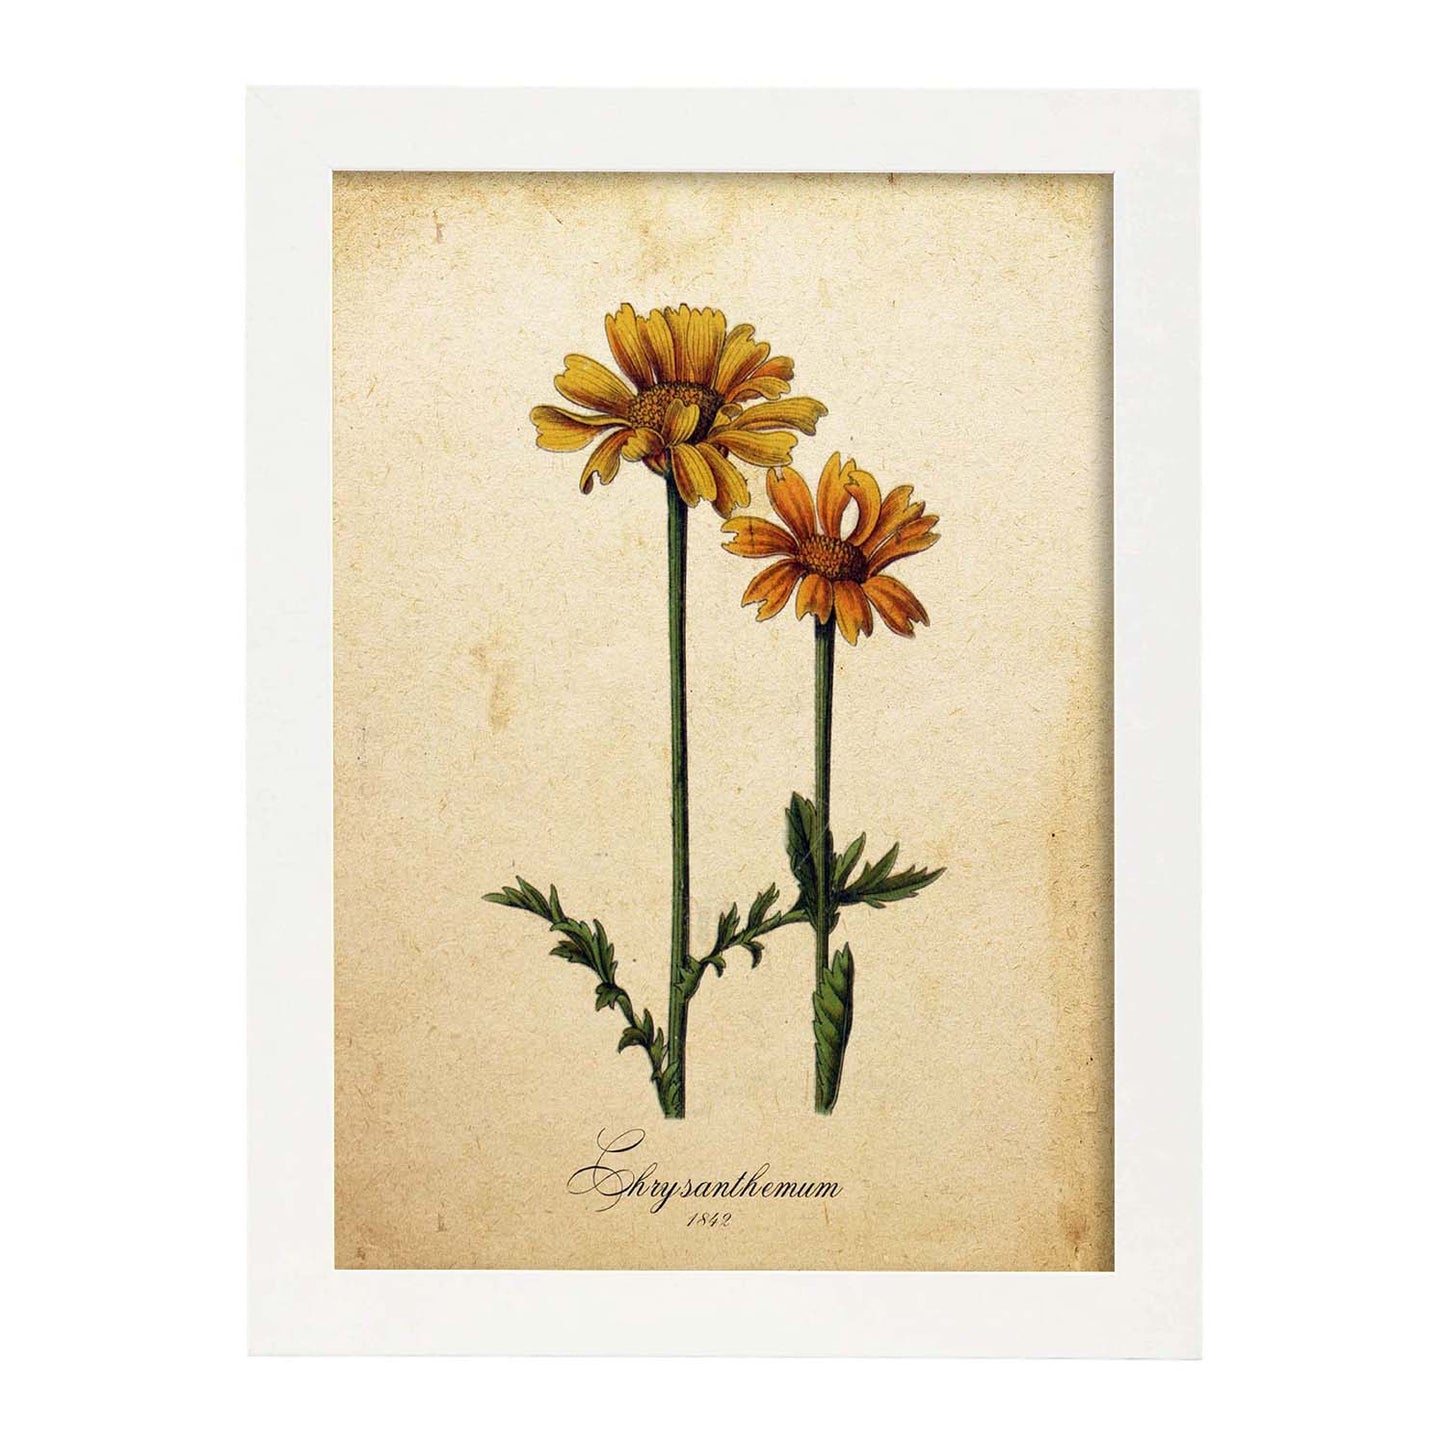 Poster de flores vintage. Lámina Chrysanthemum con diseño vintage.-Artwork-Nacnic-A3-Marco Blanco-Nacnic Estudio SL